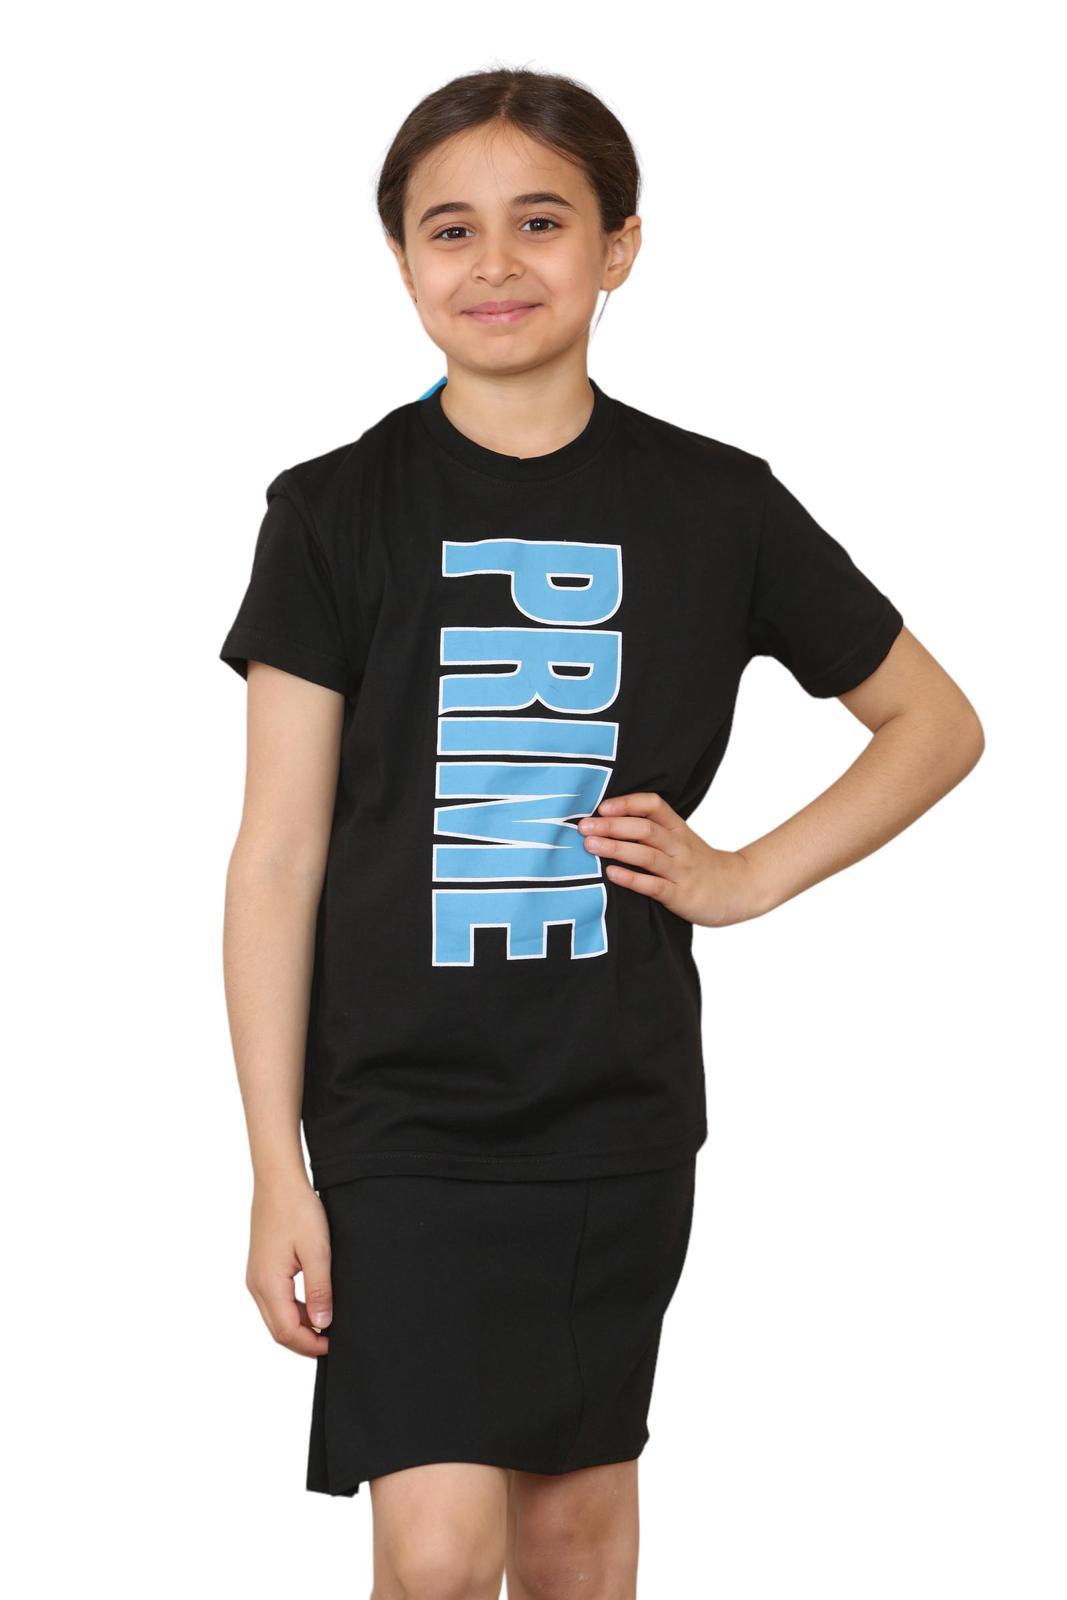 Unisex Kids PRIME Drink T-shirt KSI Logan Paul